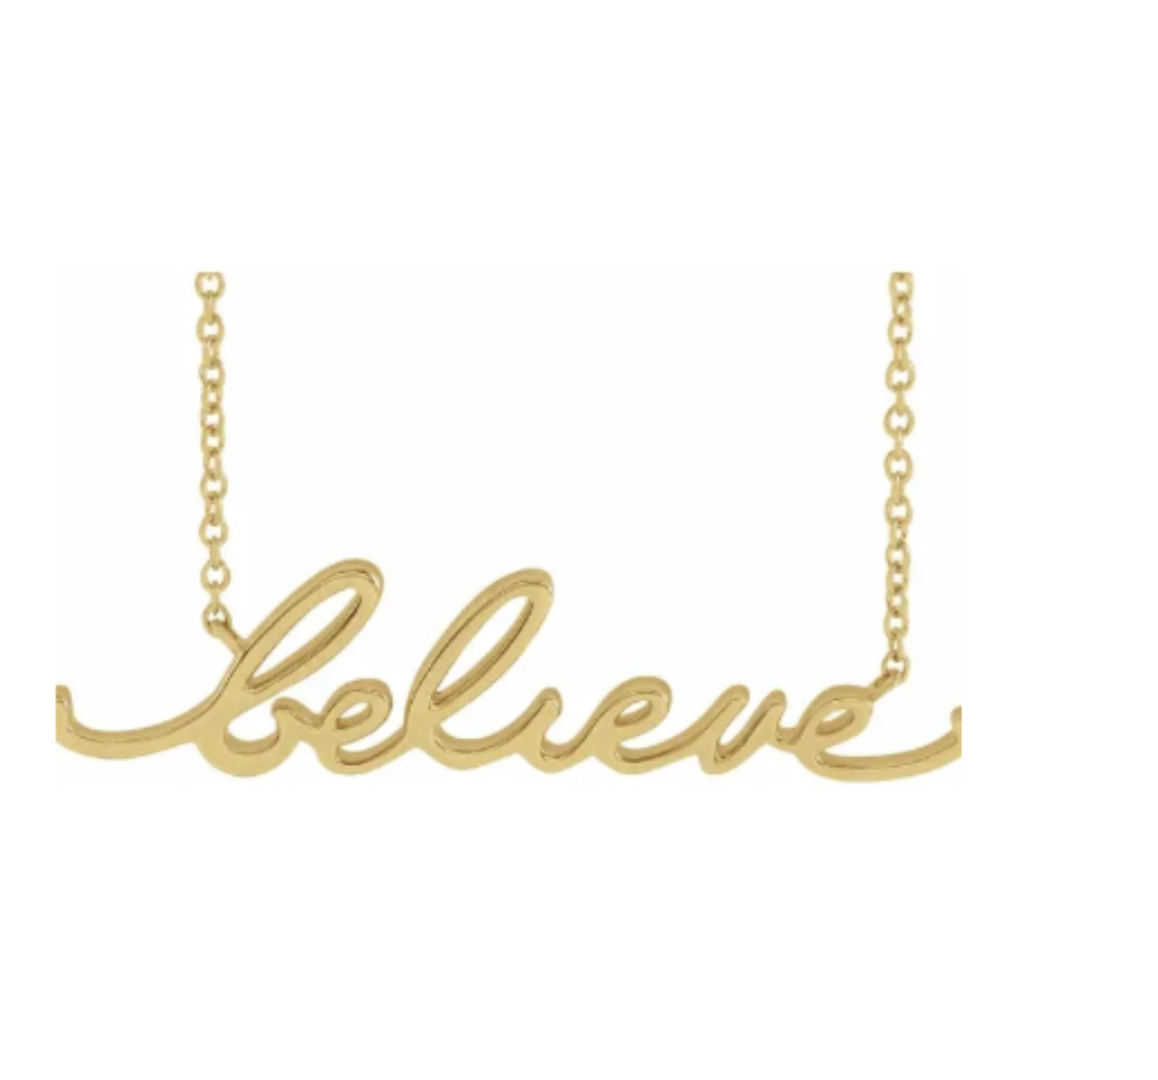 "Believe" Necklace